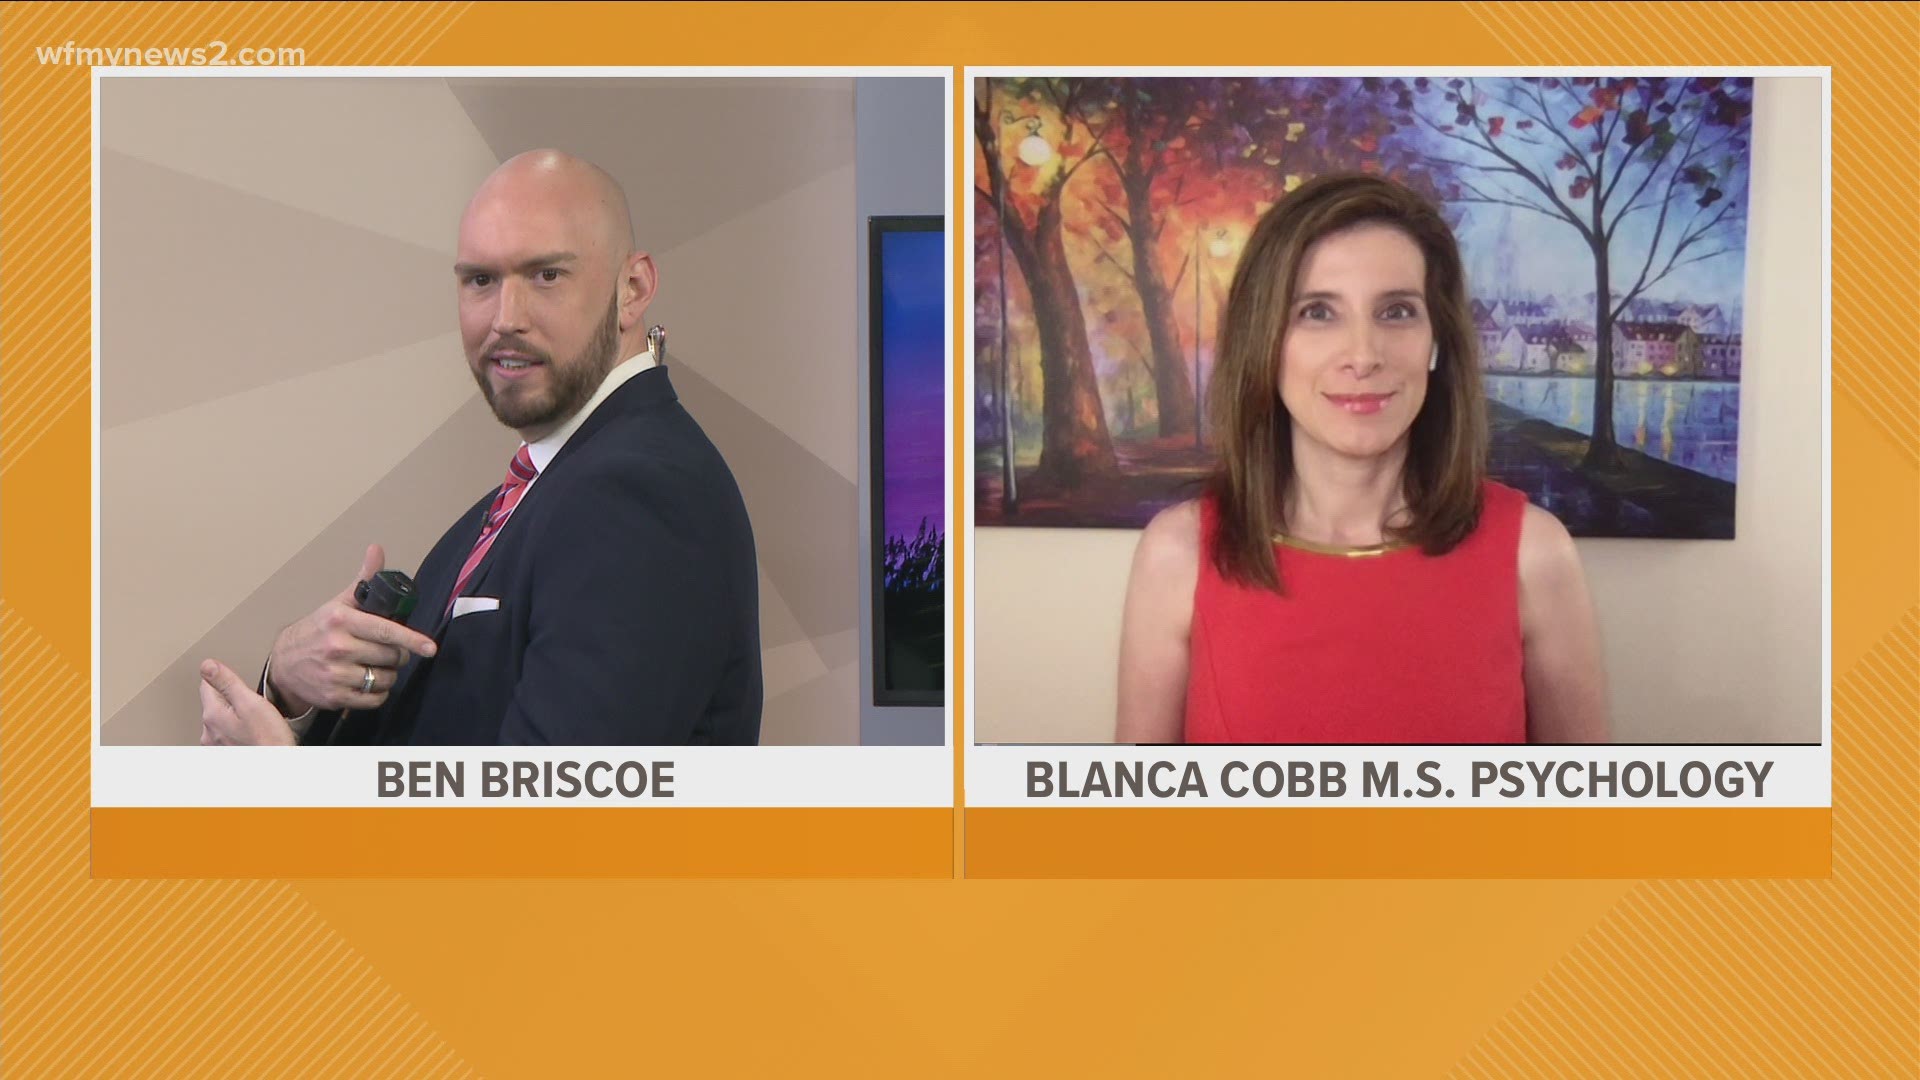 Body language expert, Blanca Cobb talks about ways to make break-up conversations easier.